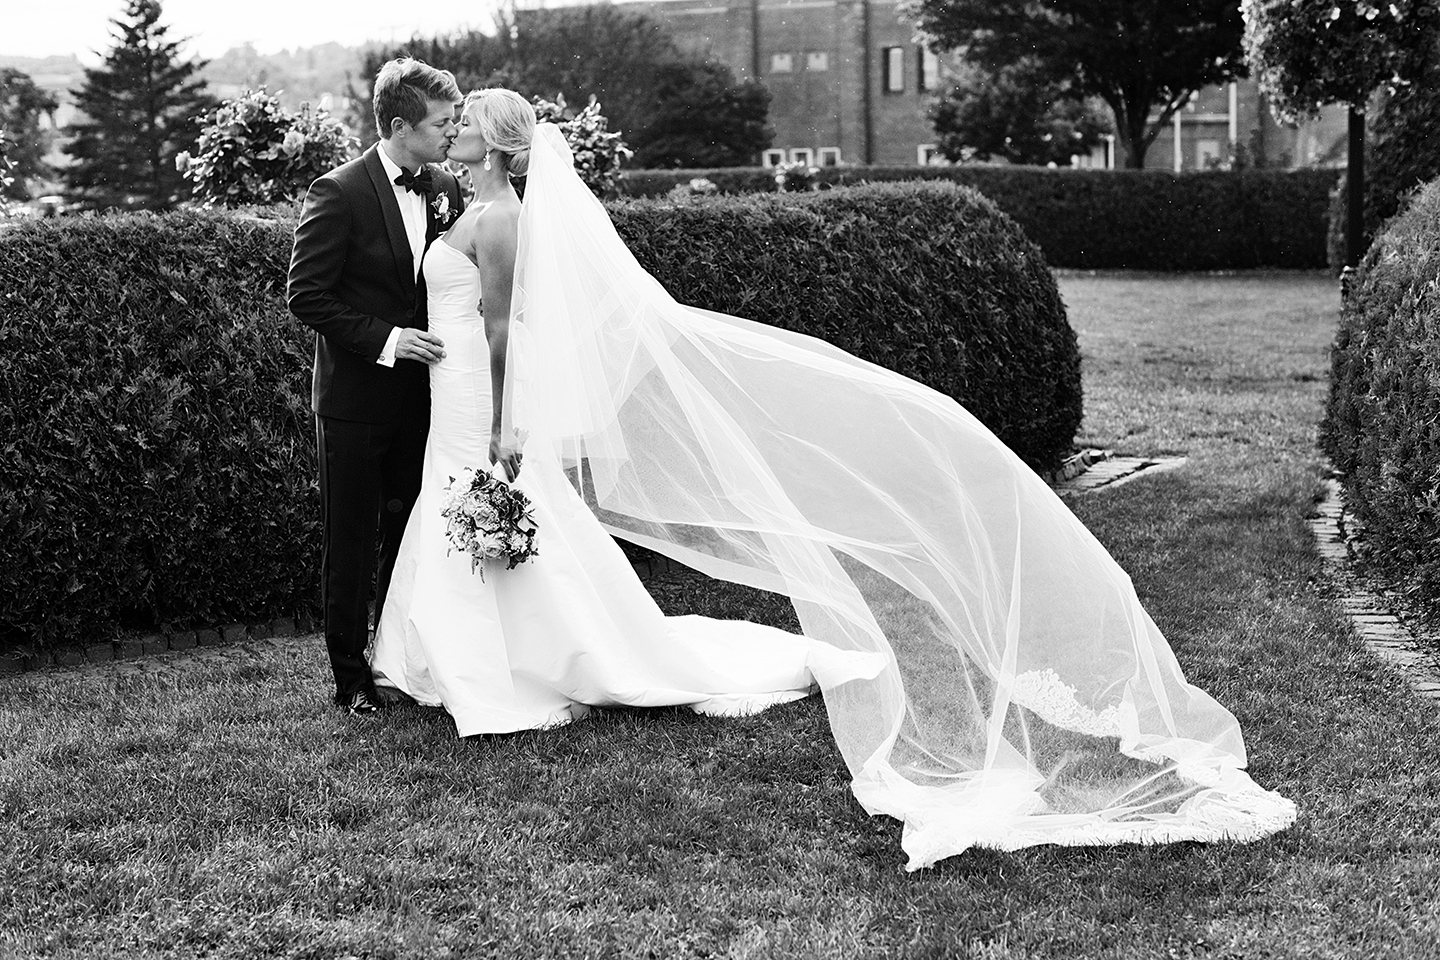 Kitchie Gammie Club Duluth | Wedding Photographer | Photogen Inc. | Eliesa Johnson | Based in Minneapolis, Minnesota